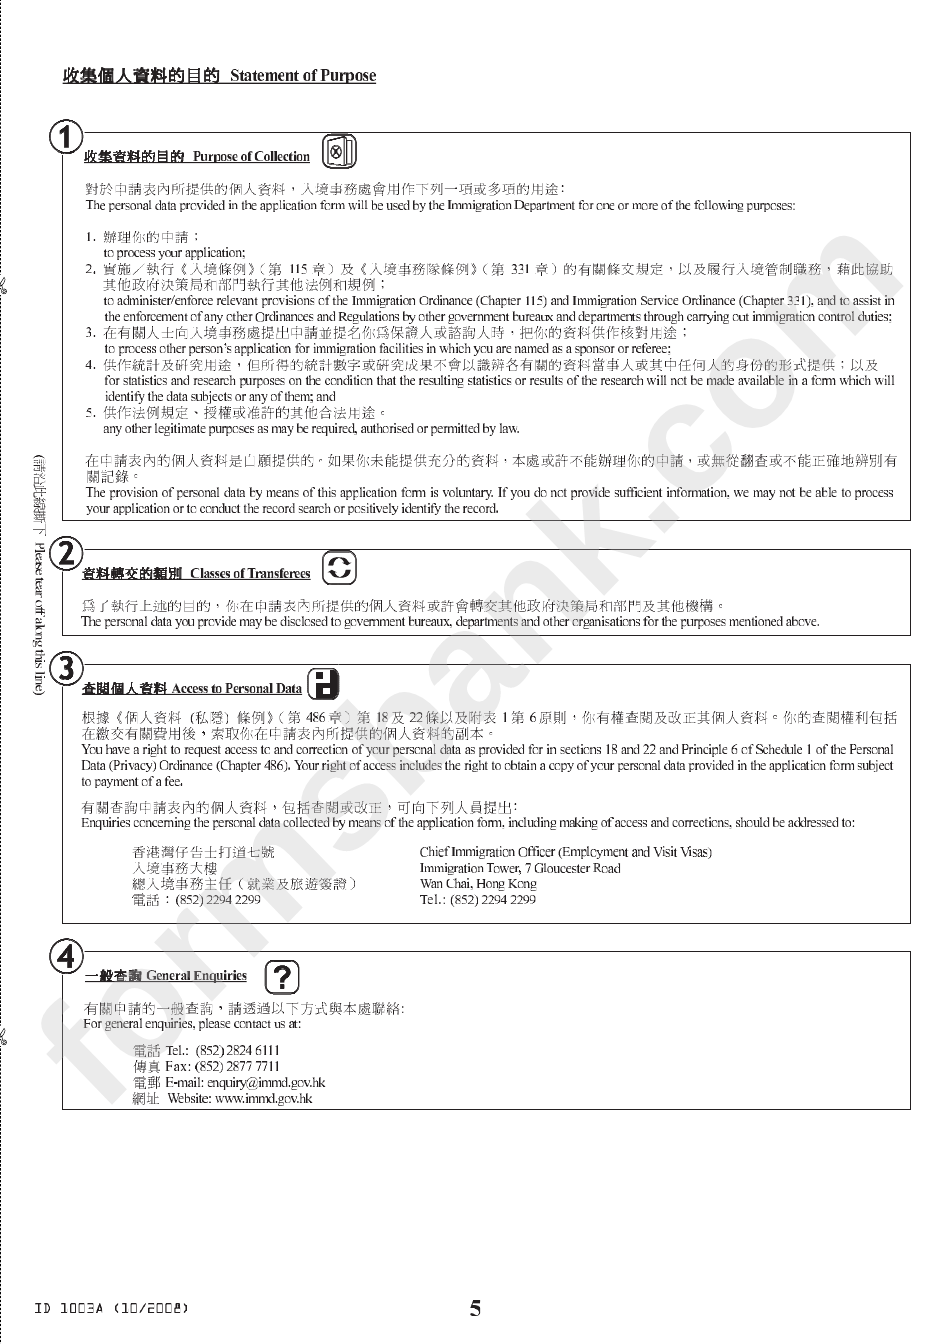 Form Id(E)936 - Visa/entry Permit Application Form